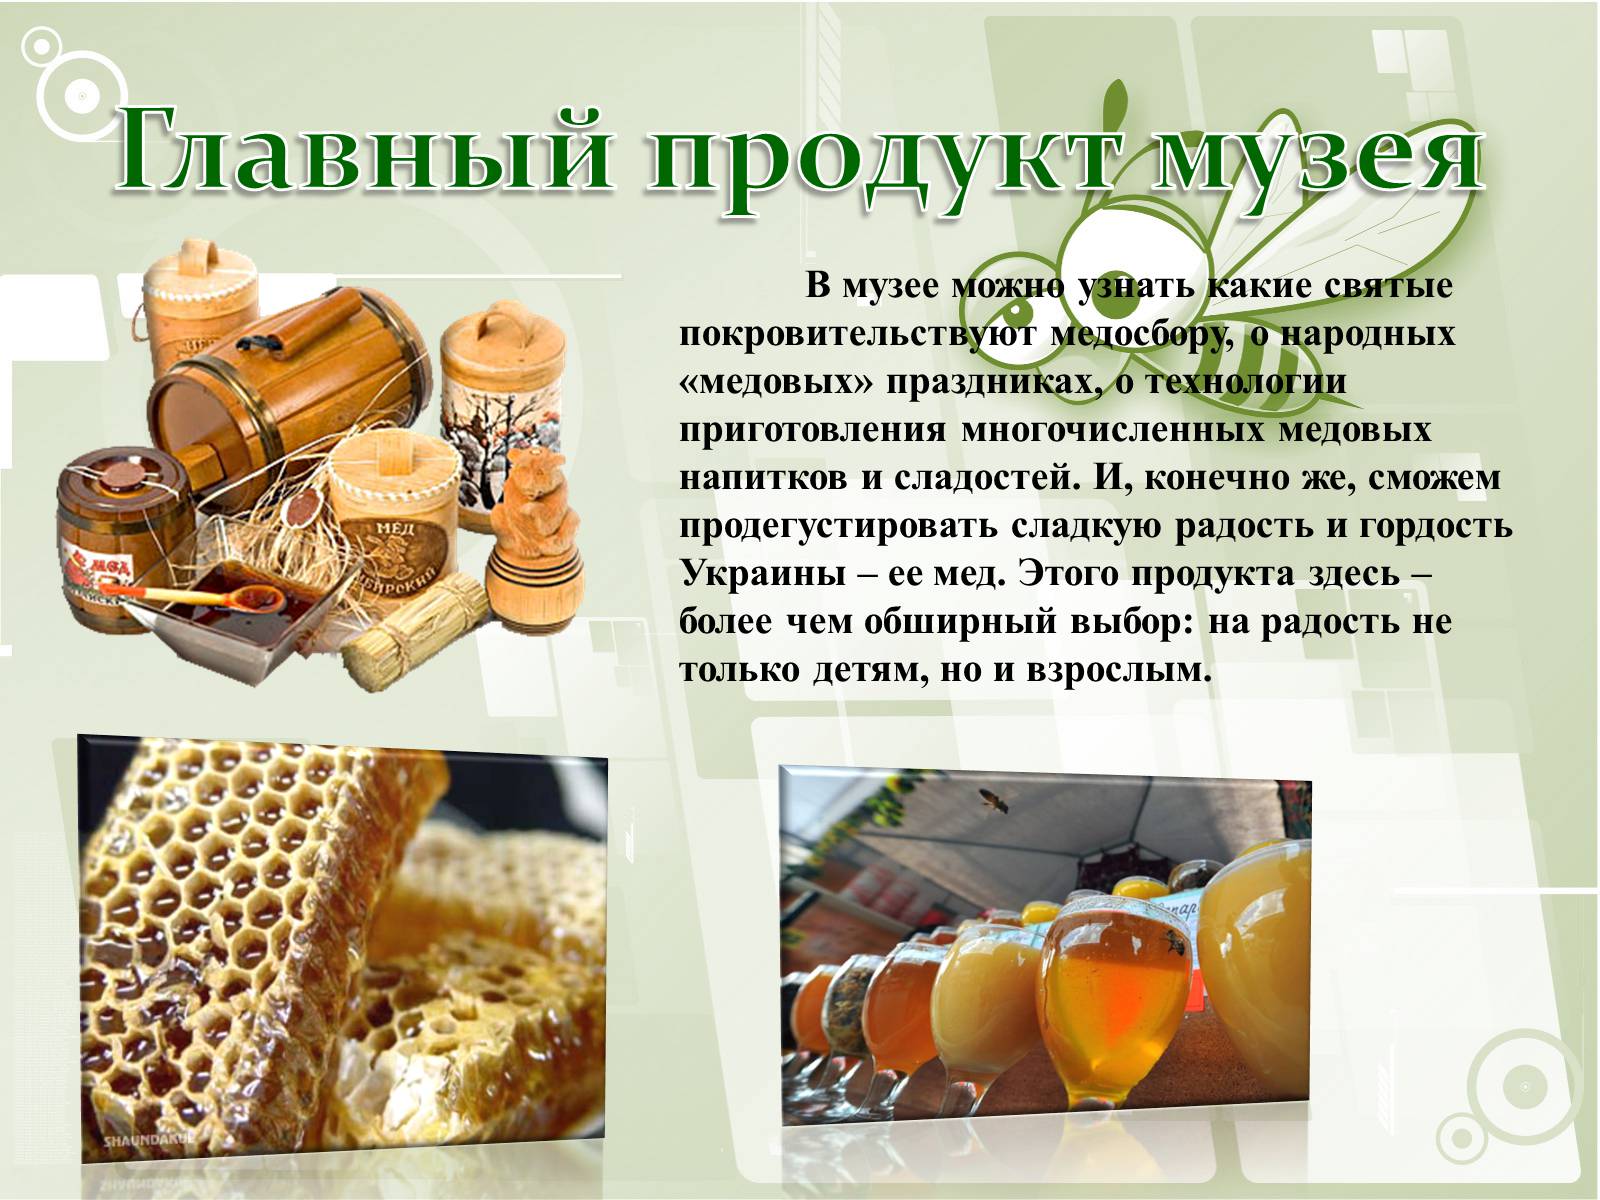 Презентація на тему «Национальный музей пчеловодства Украины» - Слайд #11